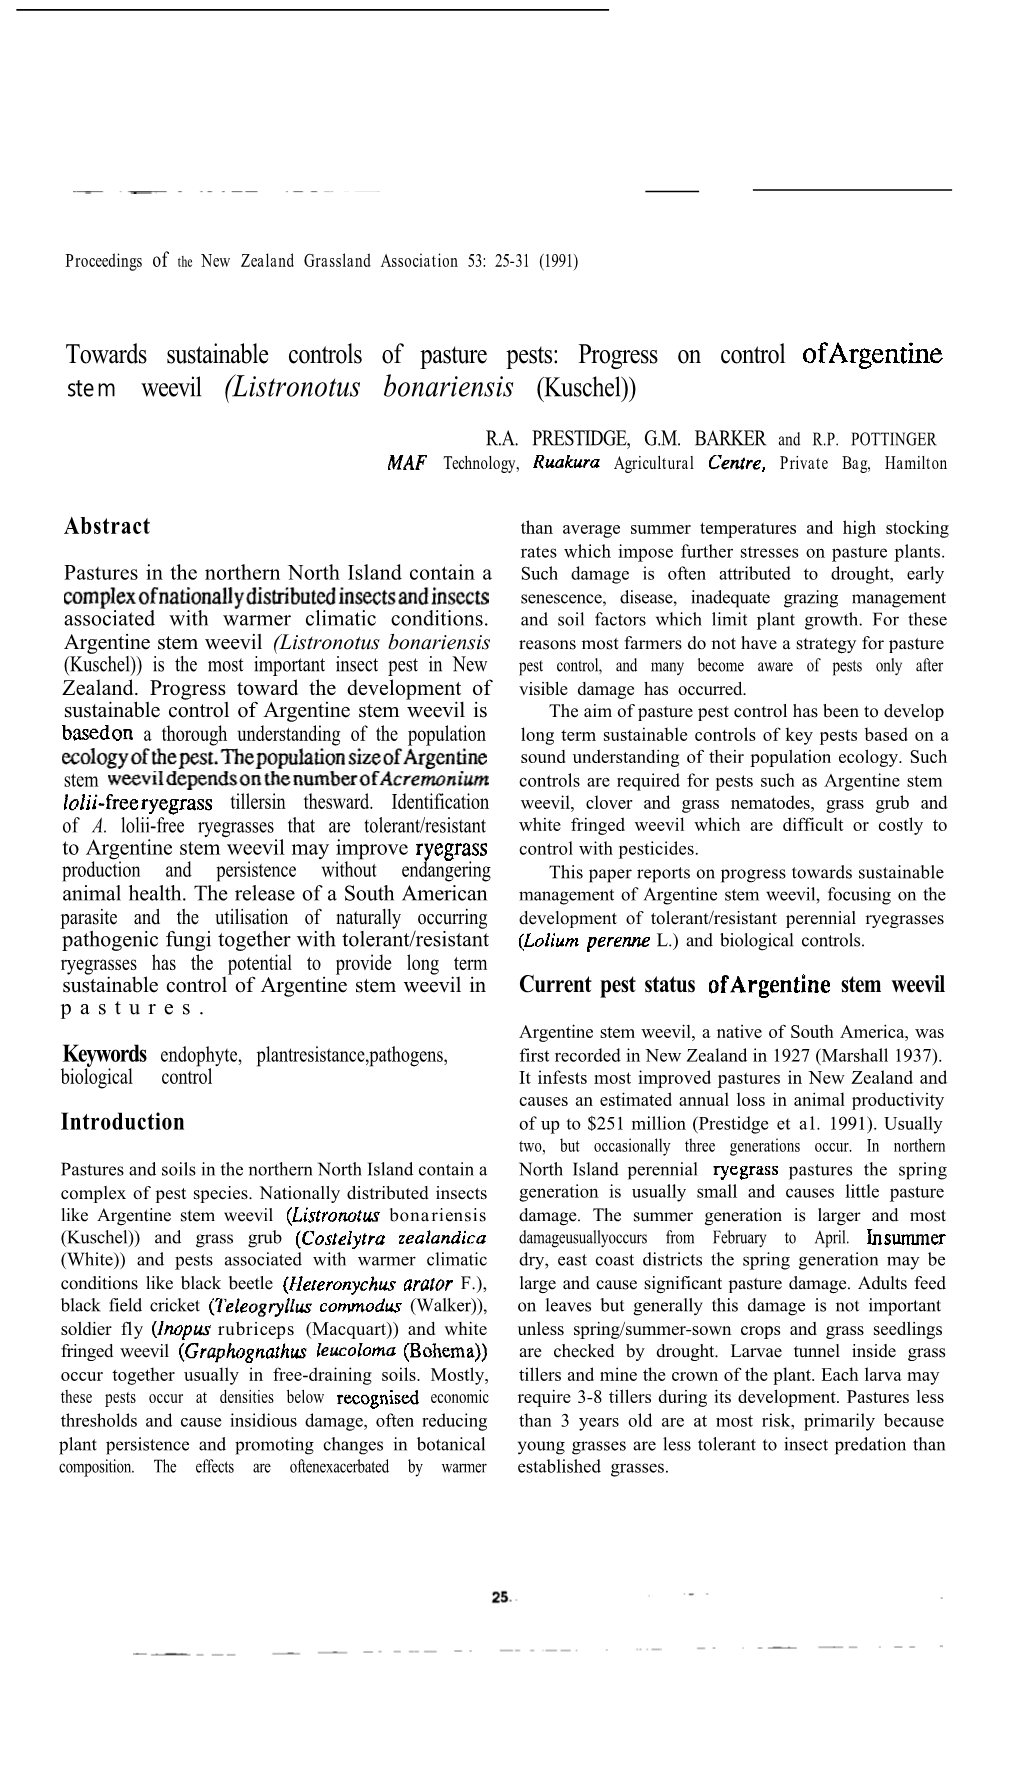 Progress on Control of Argentine Stem Weevil (Listronotus Bonariensis